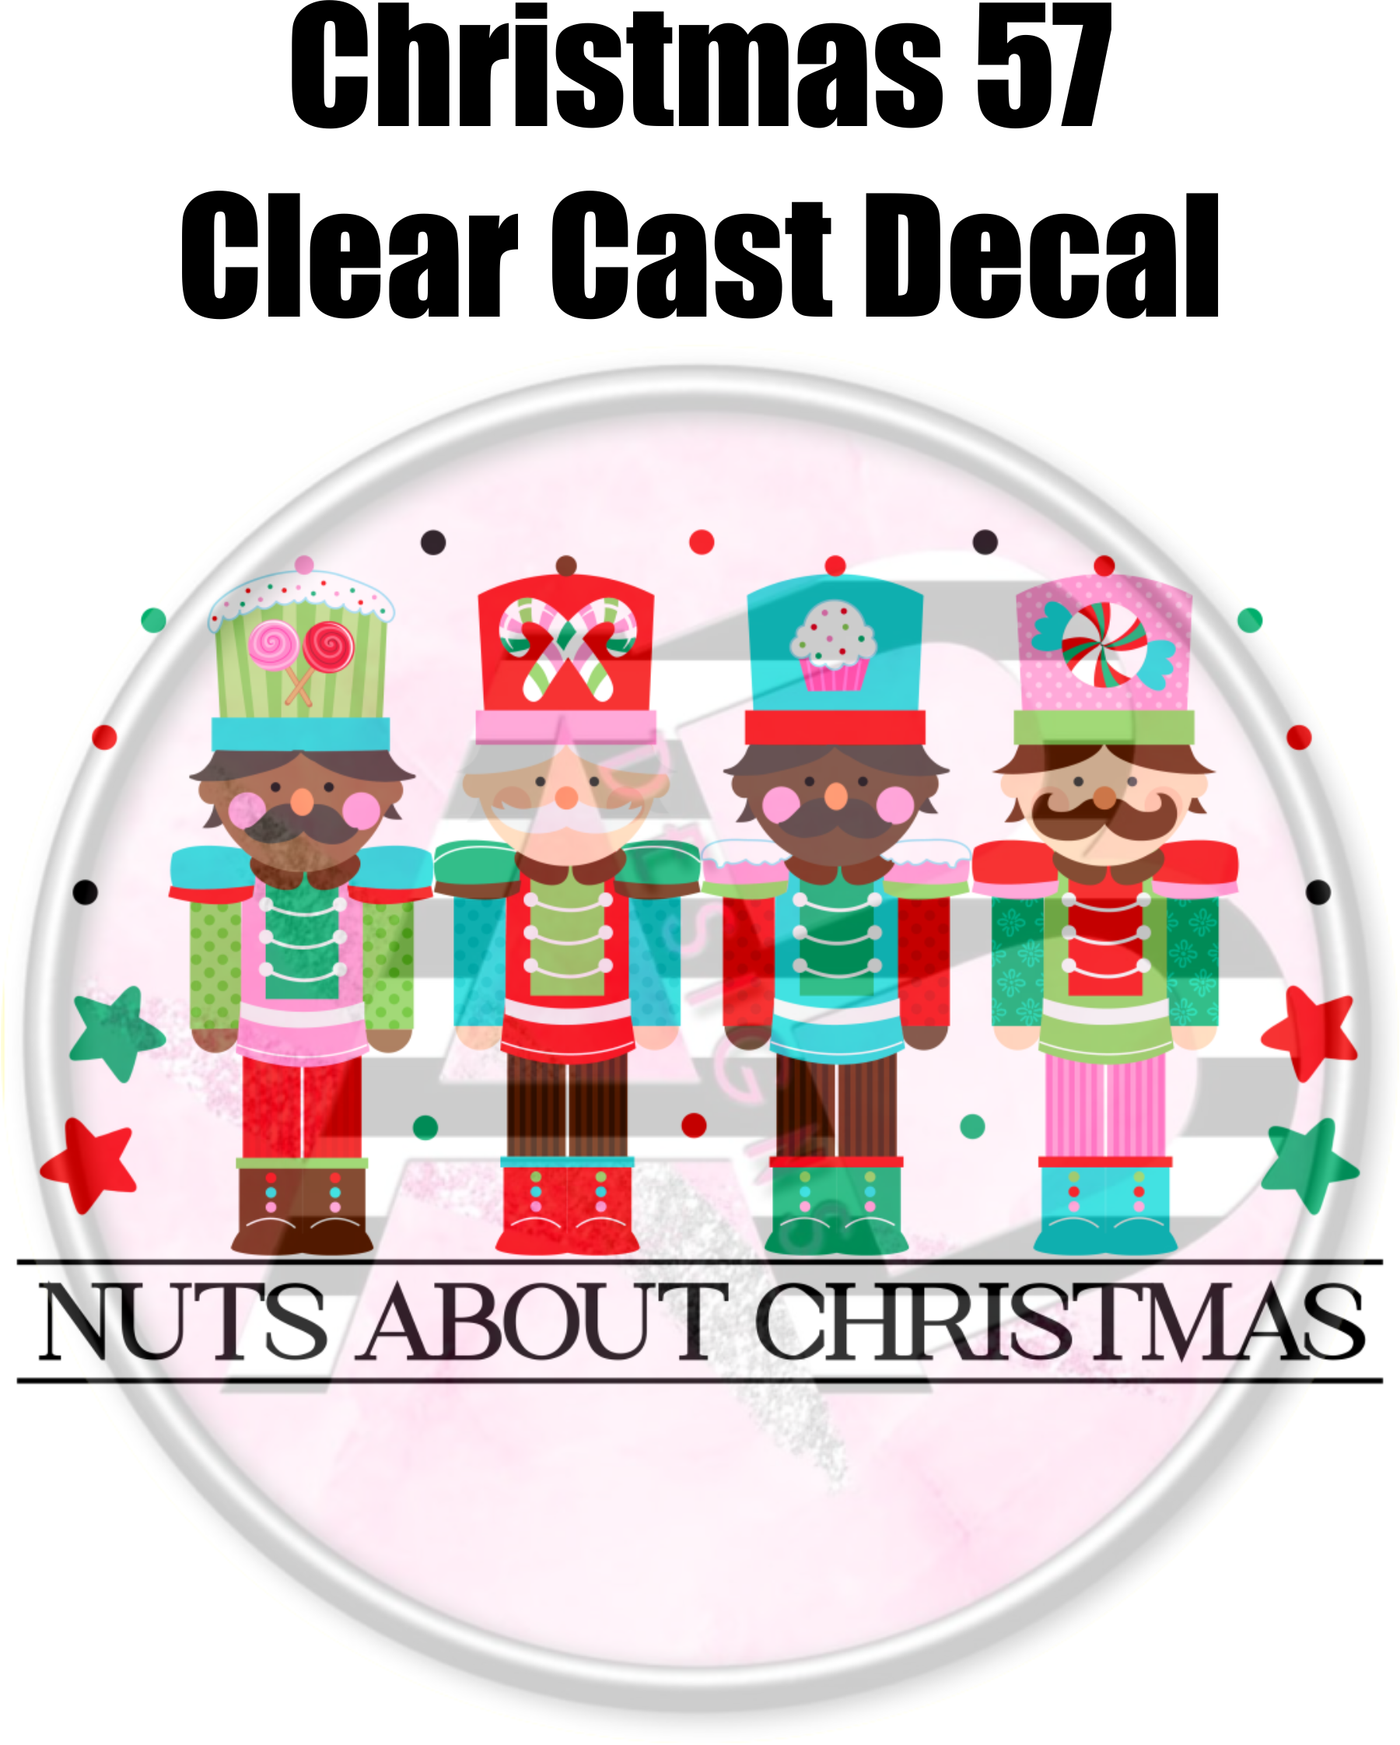 Christmas 57 - Clear Cast Decal